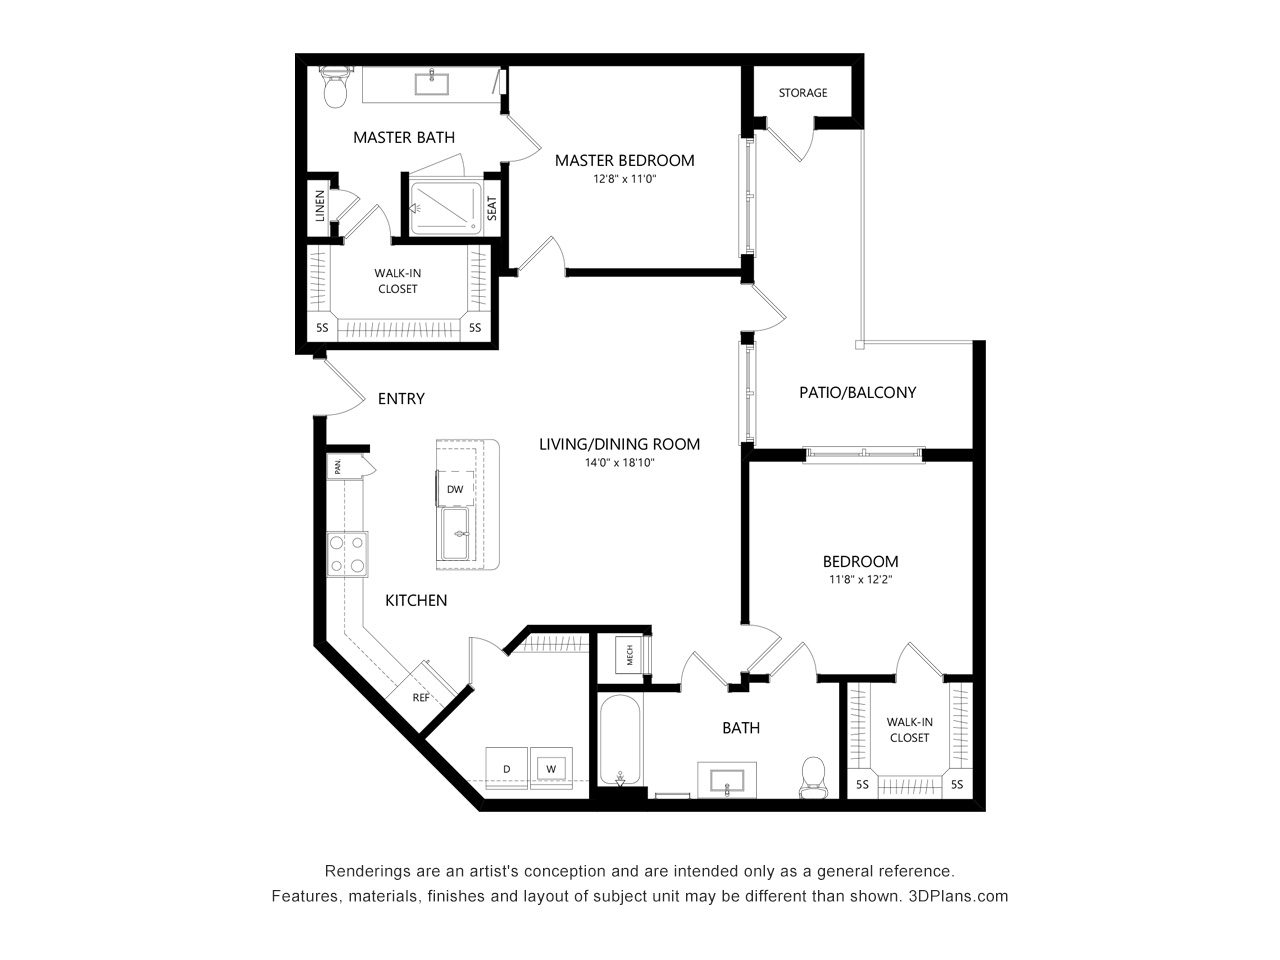 7_Black-and-White-floor-plans « 3Dplans.com